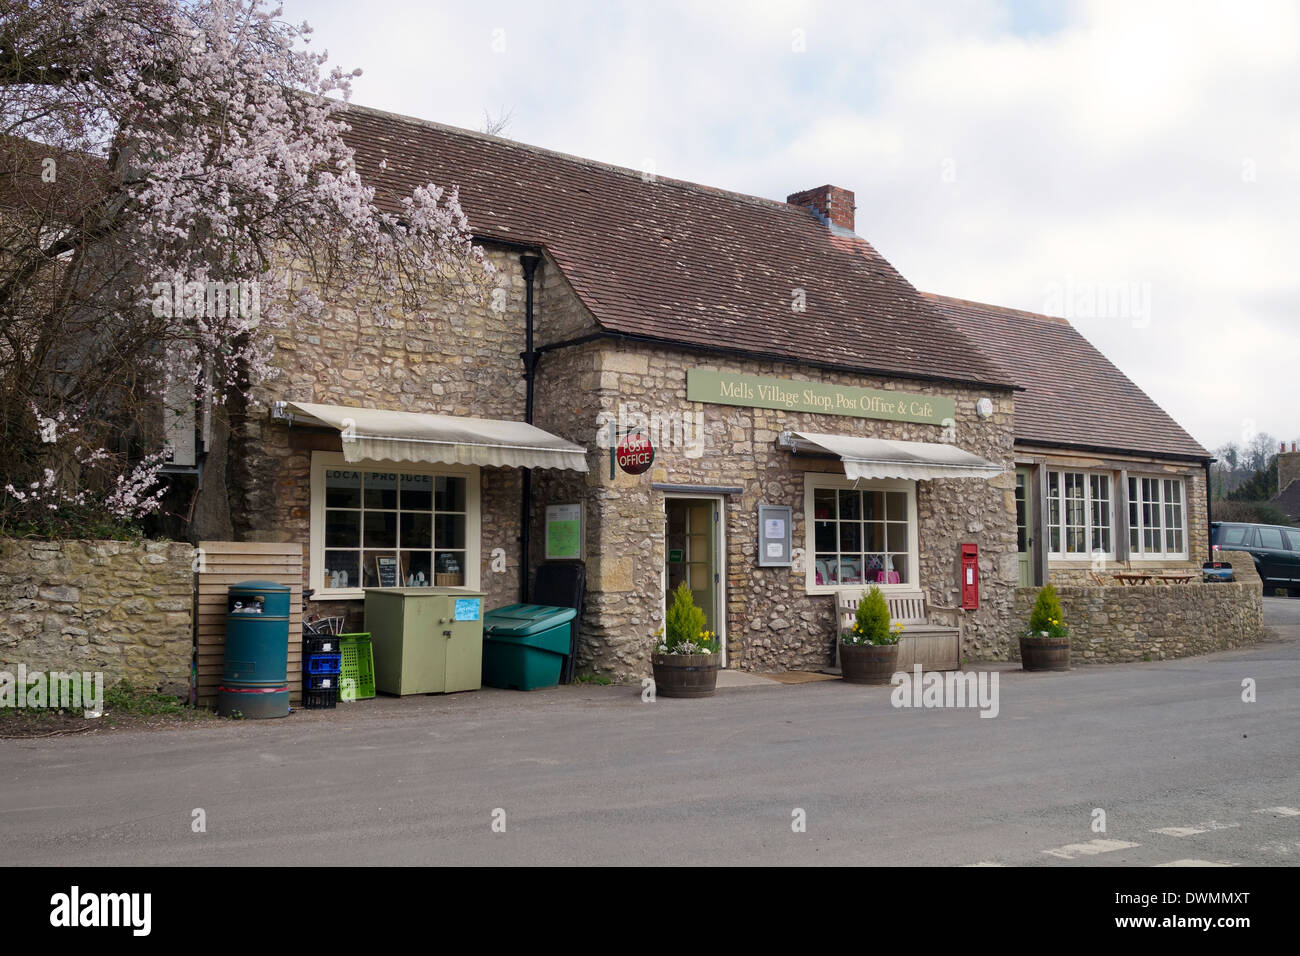 Mells Village Post Office, Shop & Cafe, Somerset, England Stock Photo